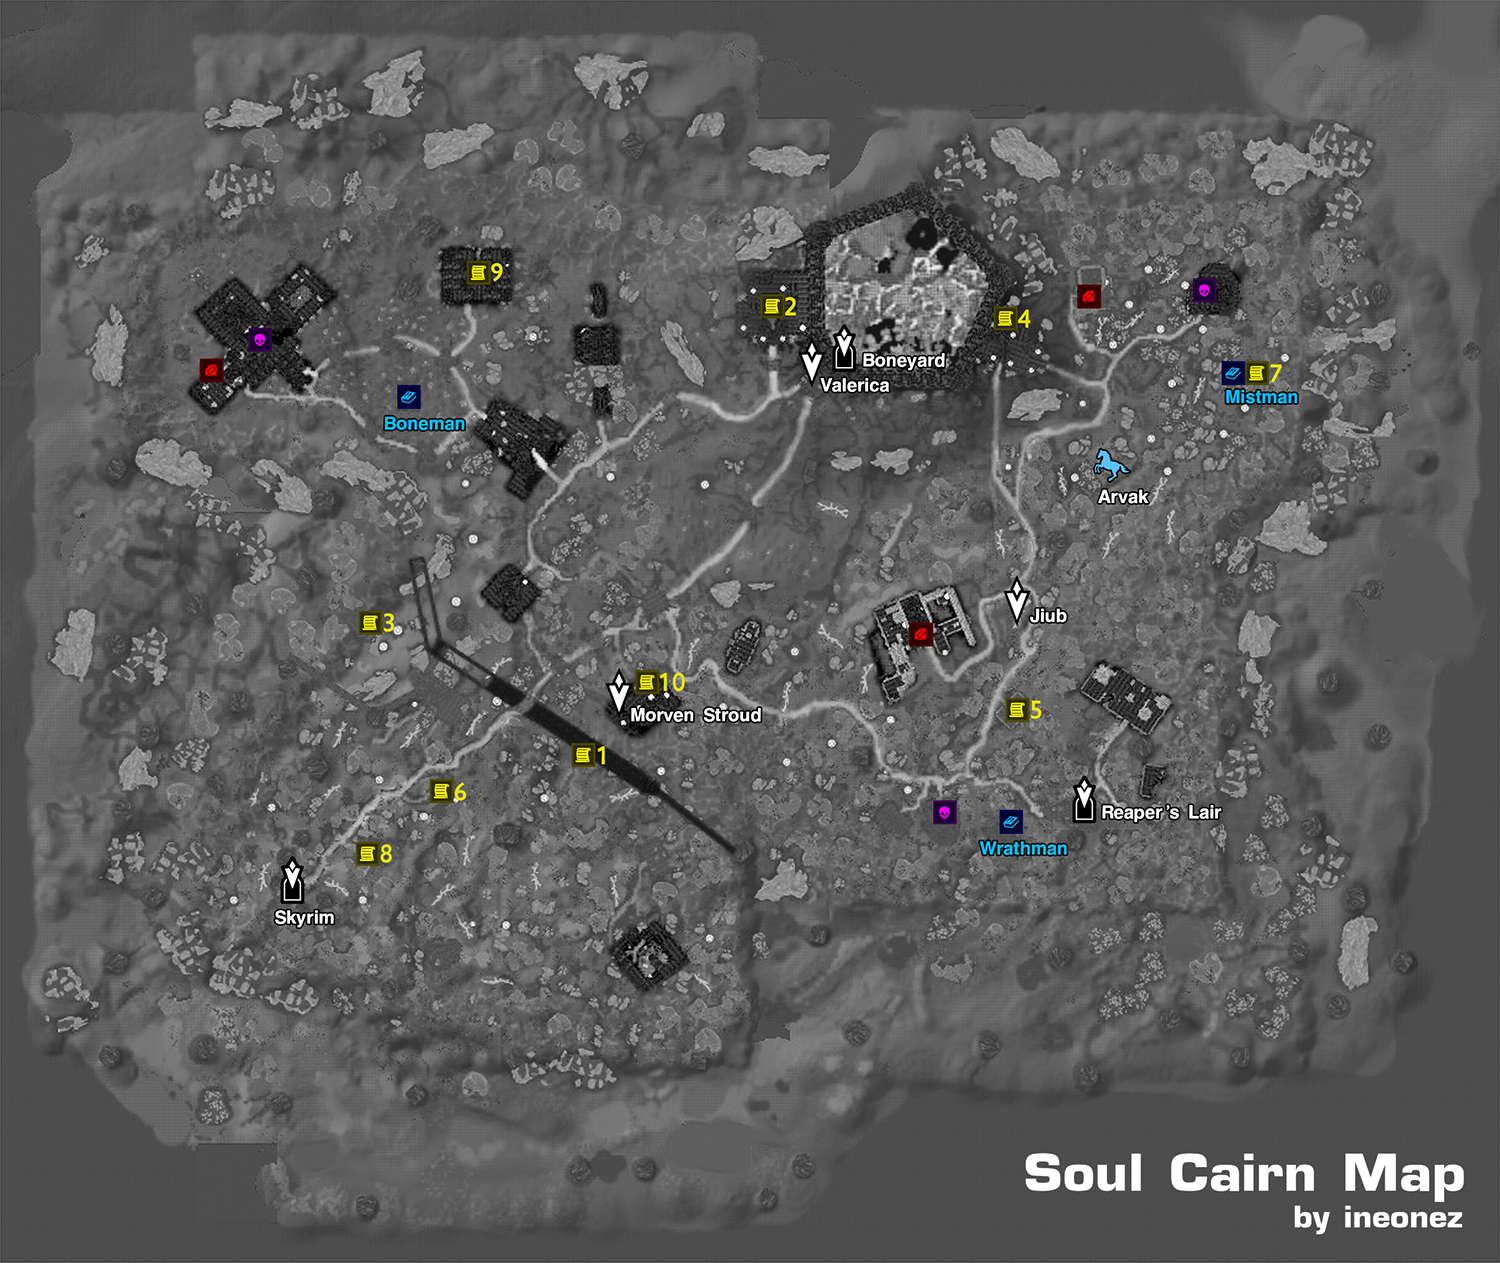 Find arvak's skull map